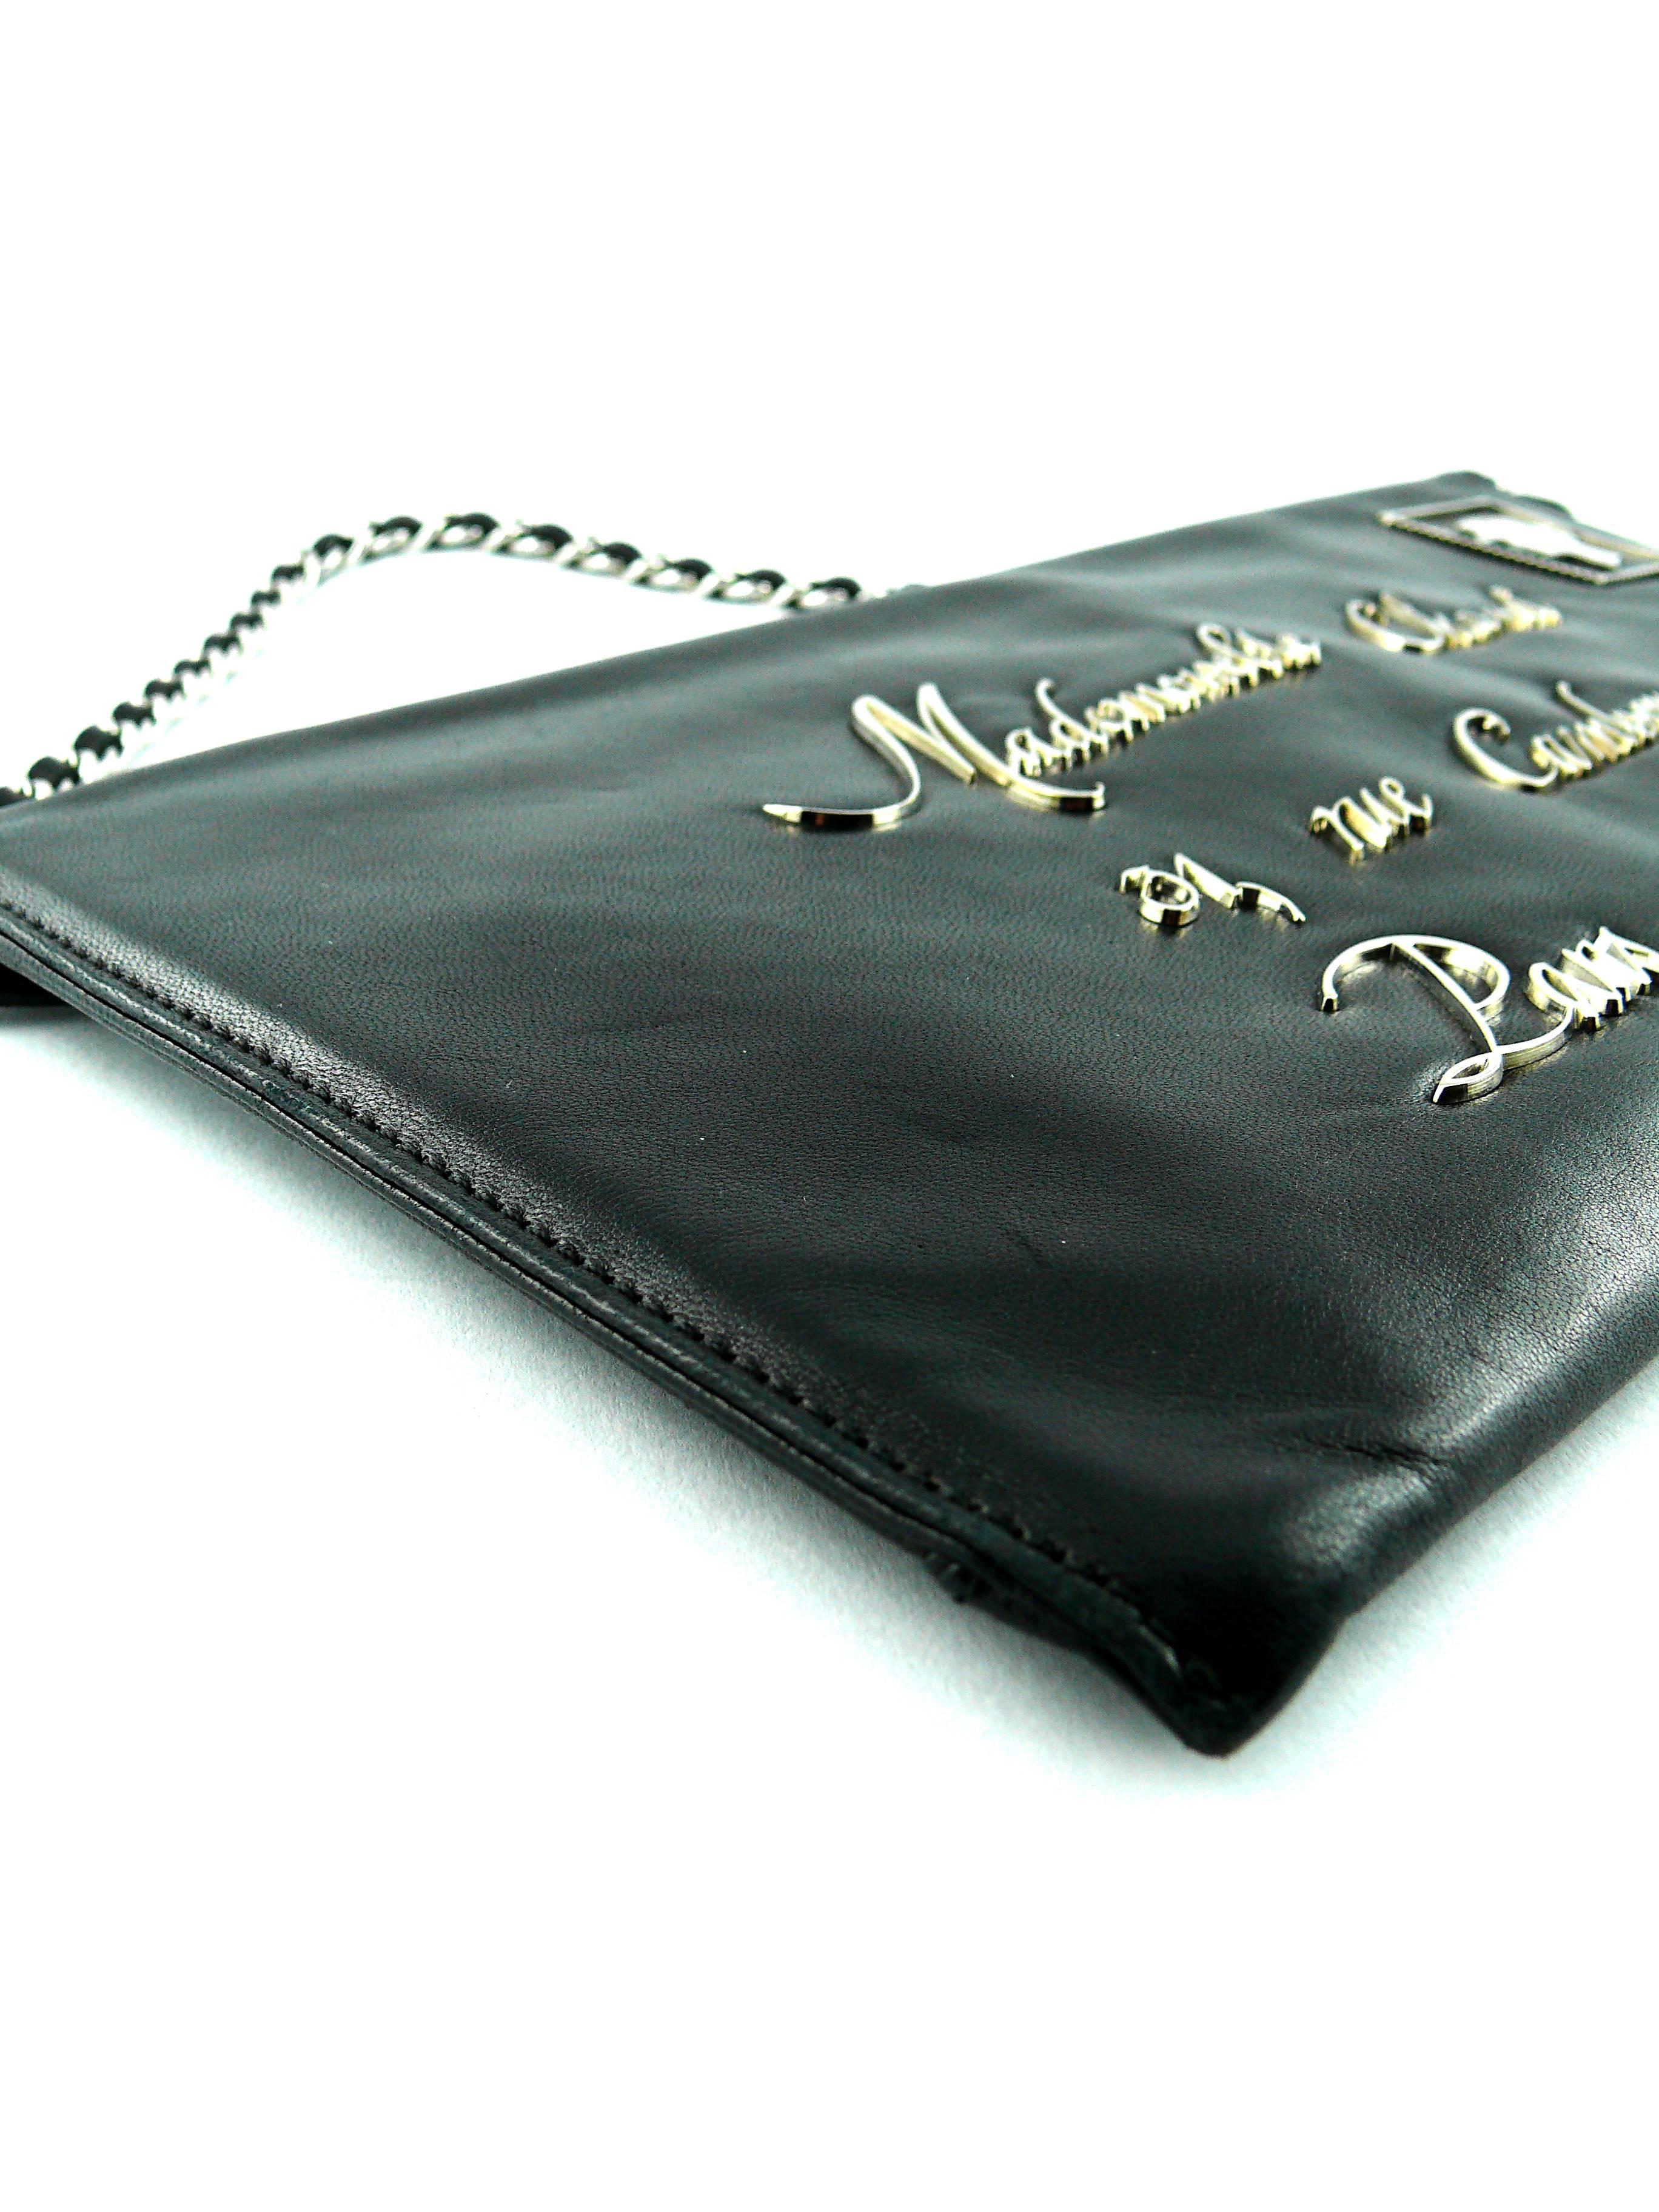 Chanel Rare Black Leather Mademoiselle Postcard Envelope Bag 1